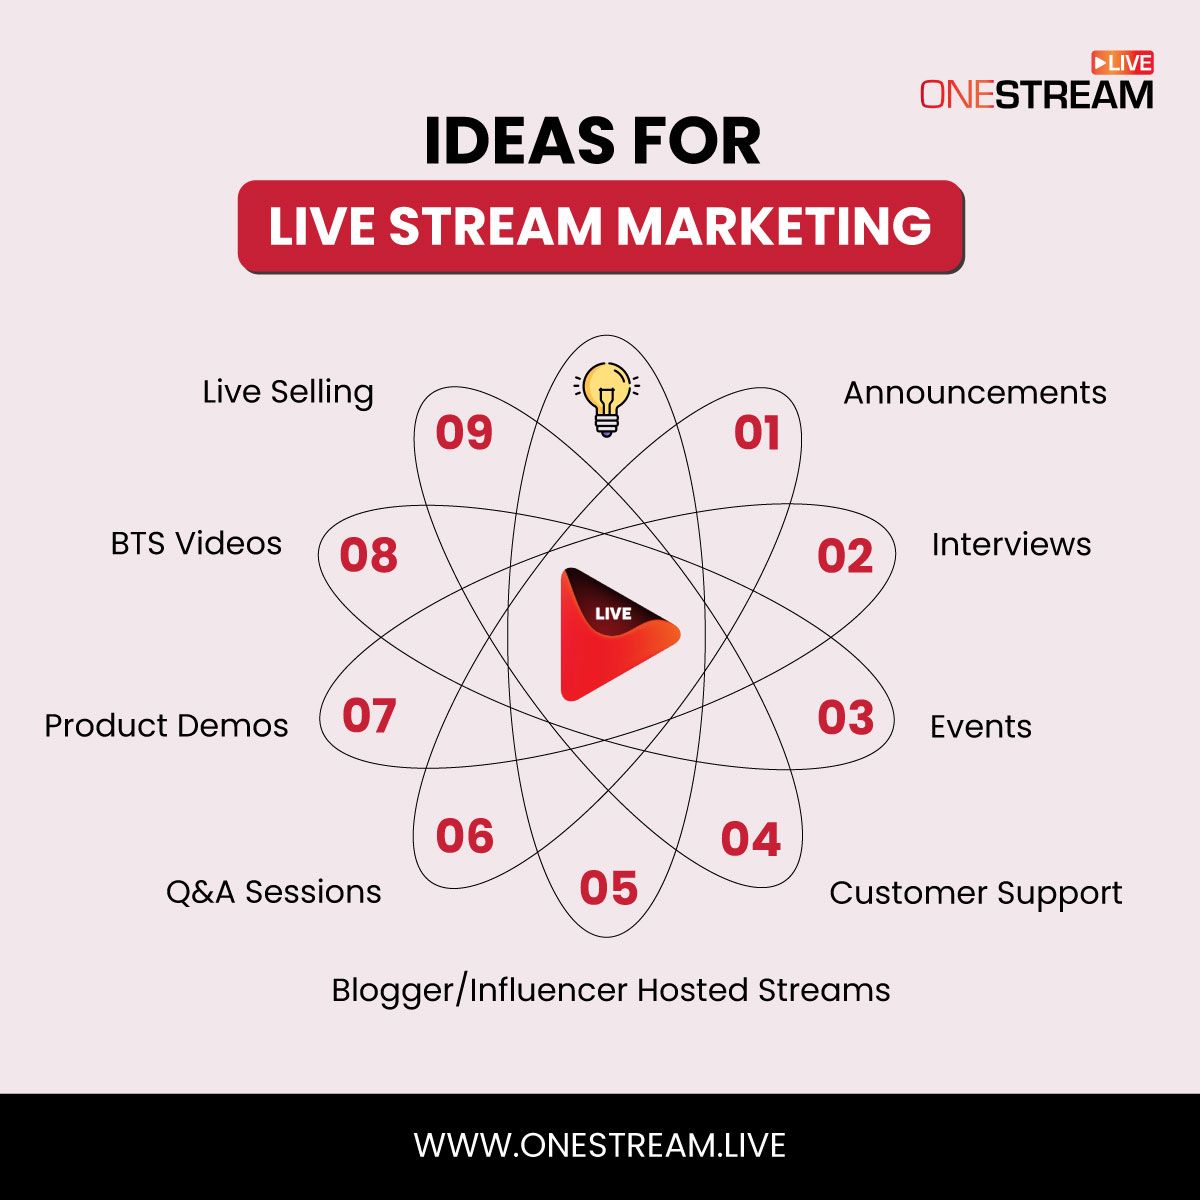 Live stream marketing